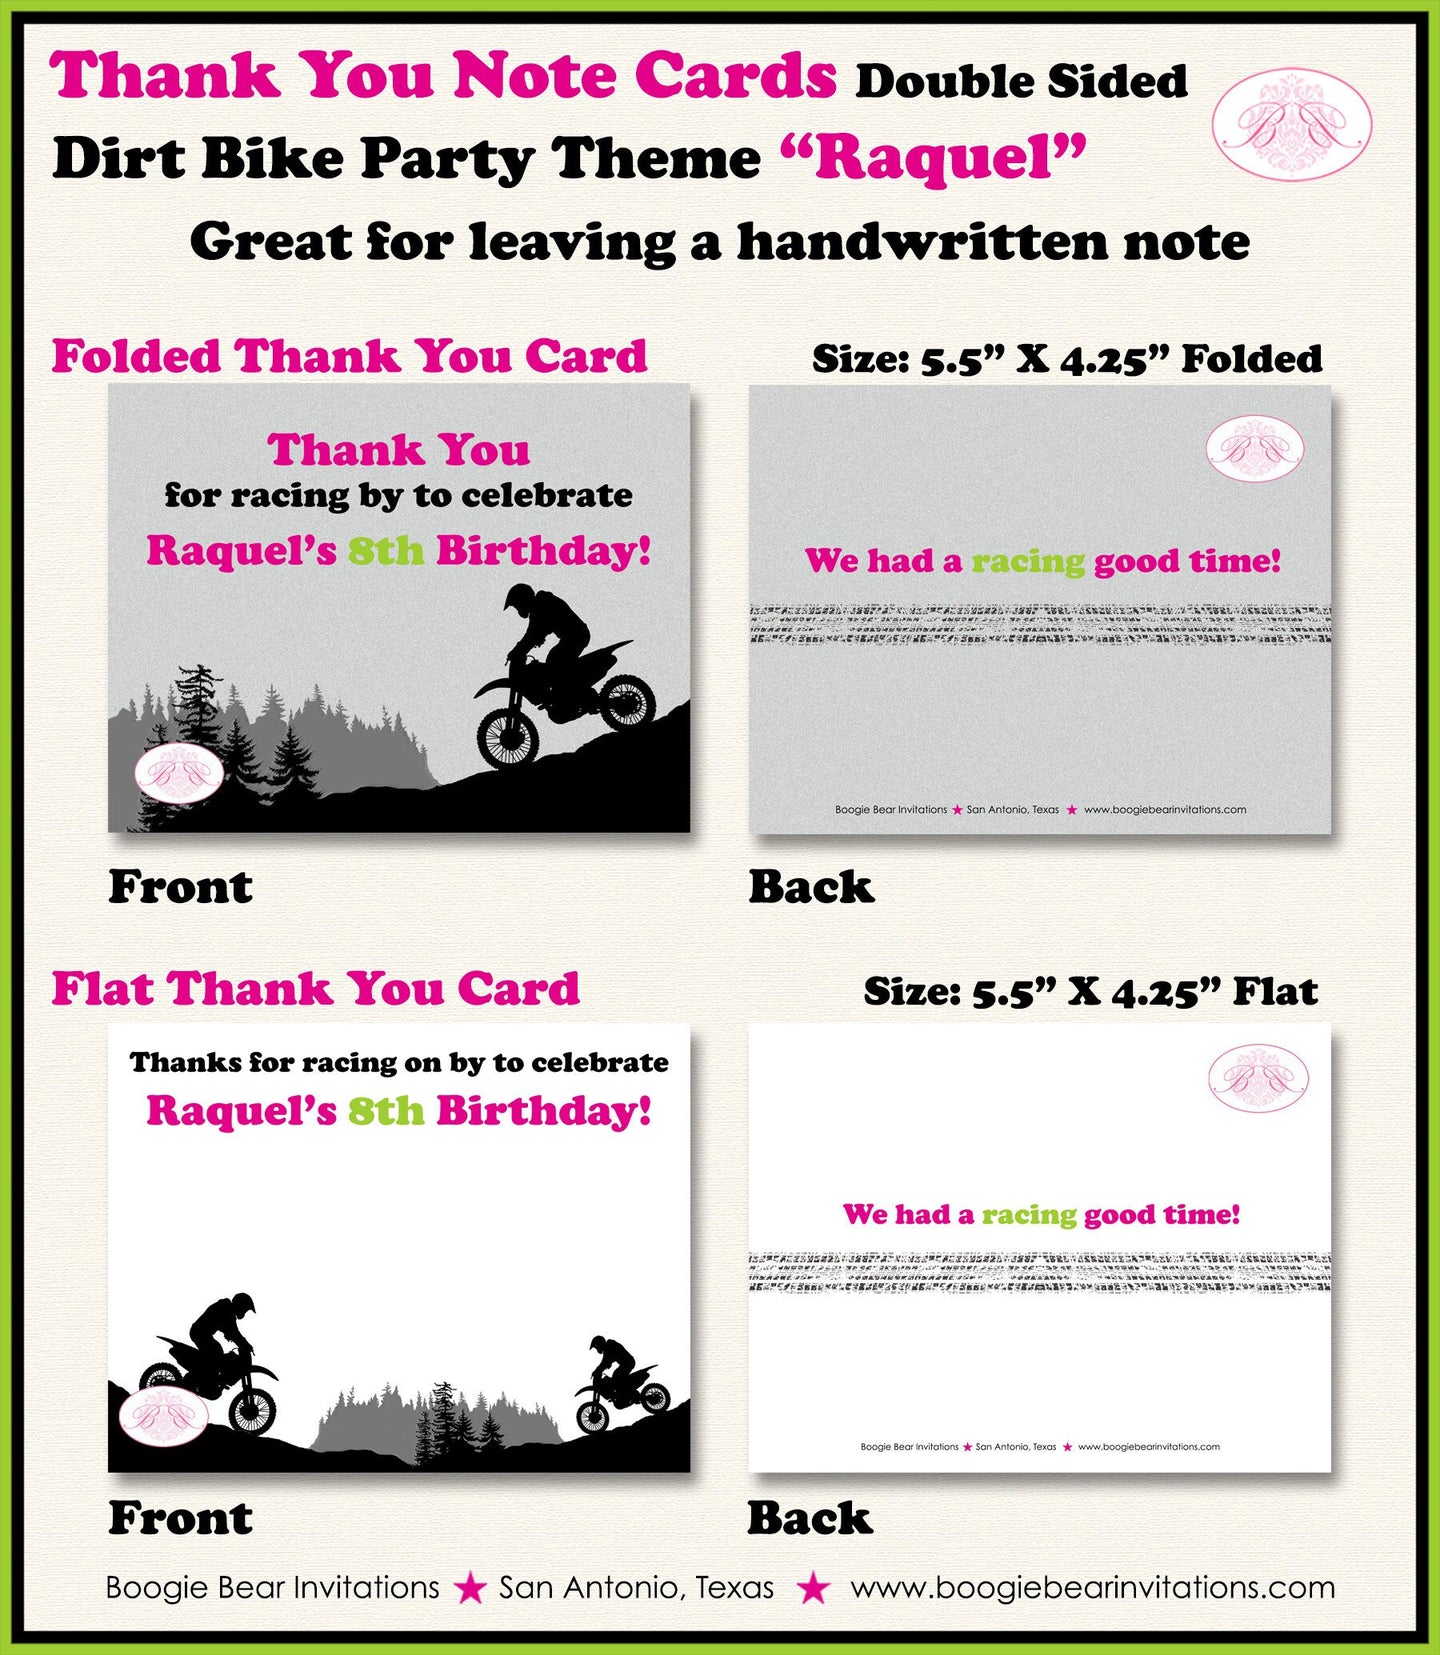 Dirt Bike Birthday Party Thank You Card Pink Girl Green Black Enduro Motocross Motorcycle Race Boogie Bear Invitations Raquel Theme Printed